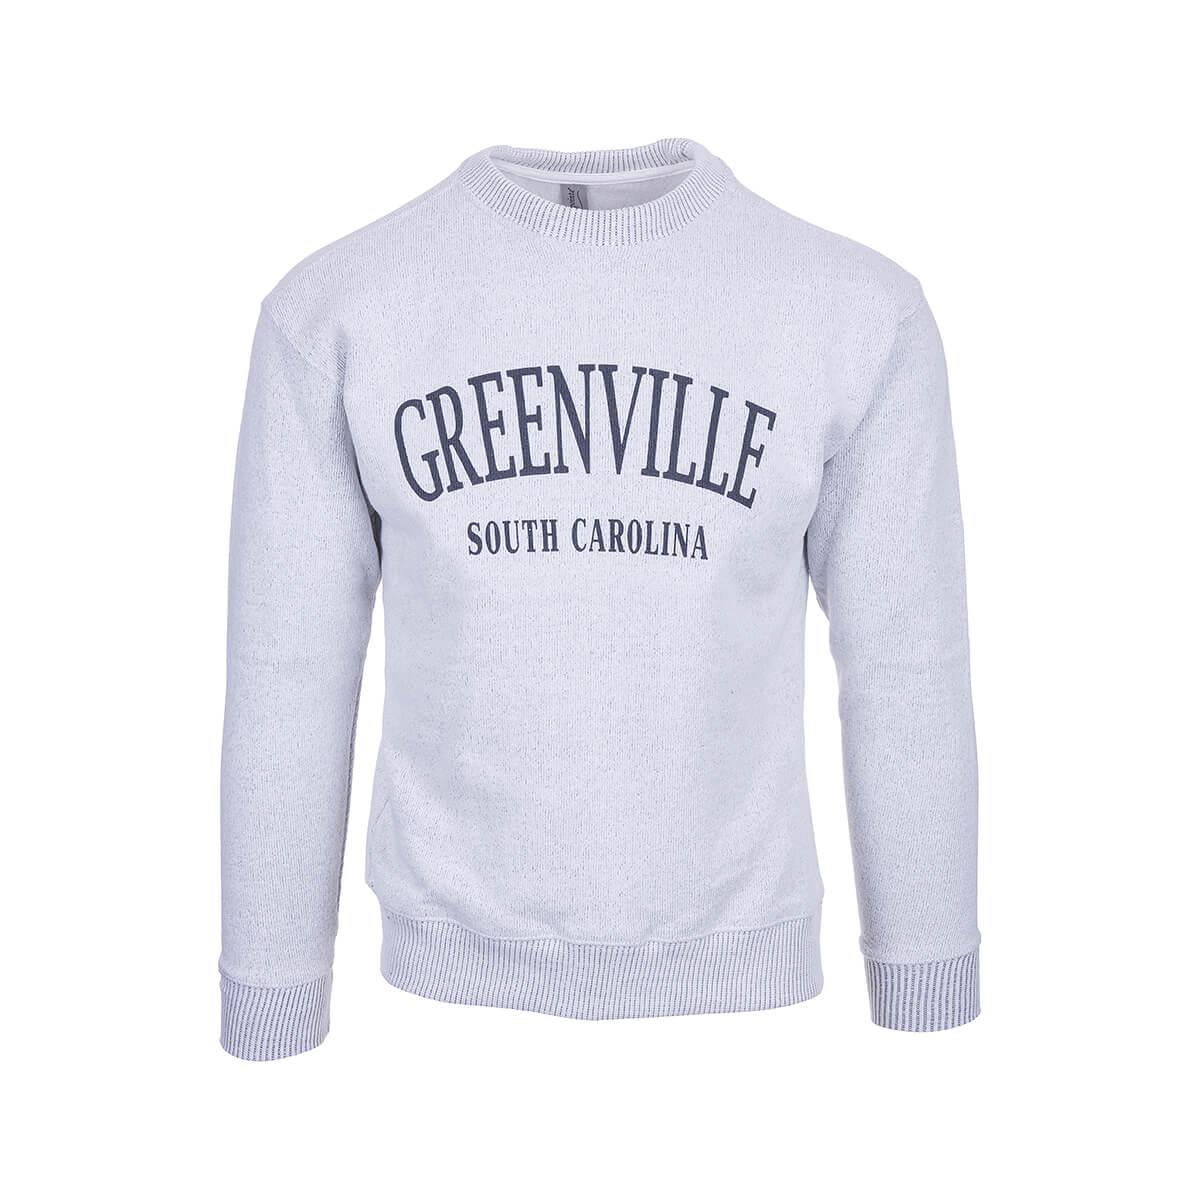  Greenville Nantucket Crew Neck Knit Sweatshirt